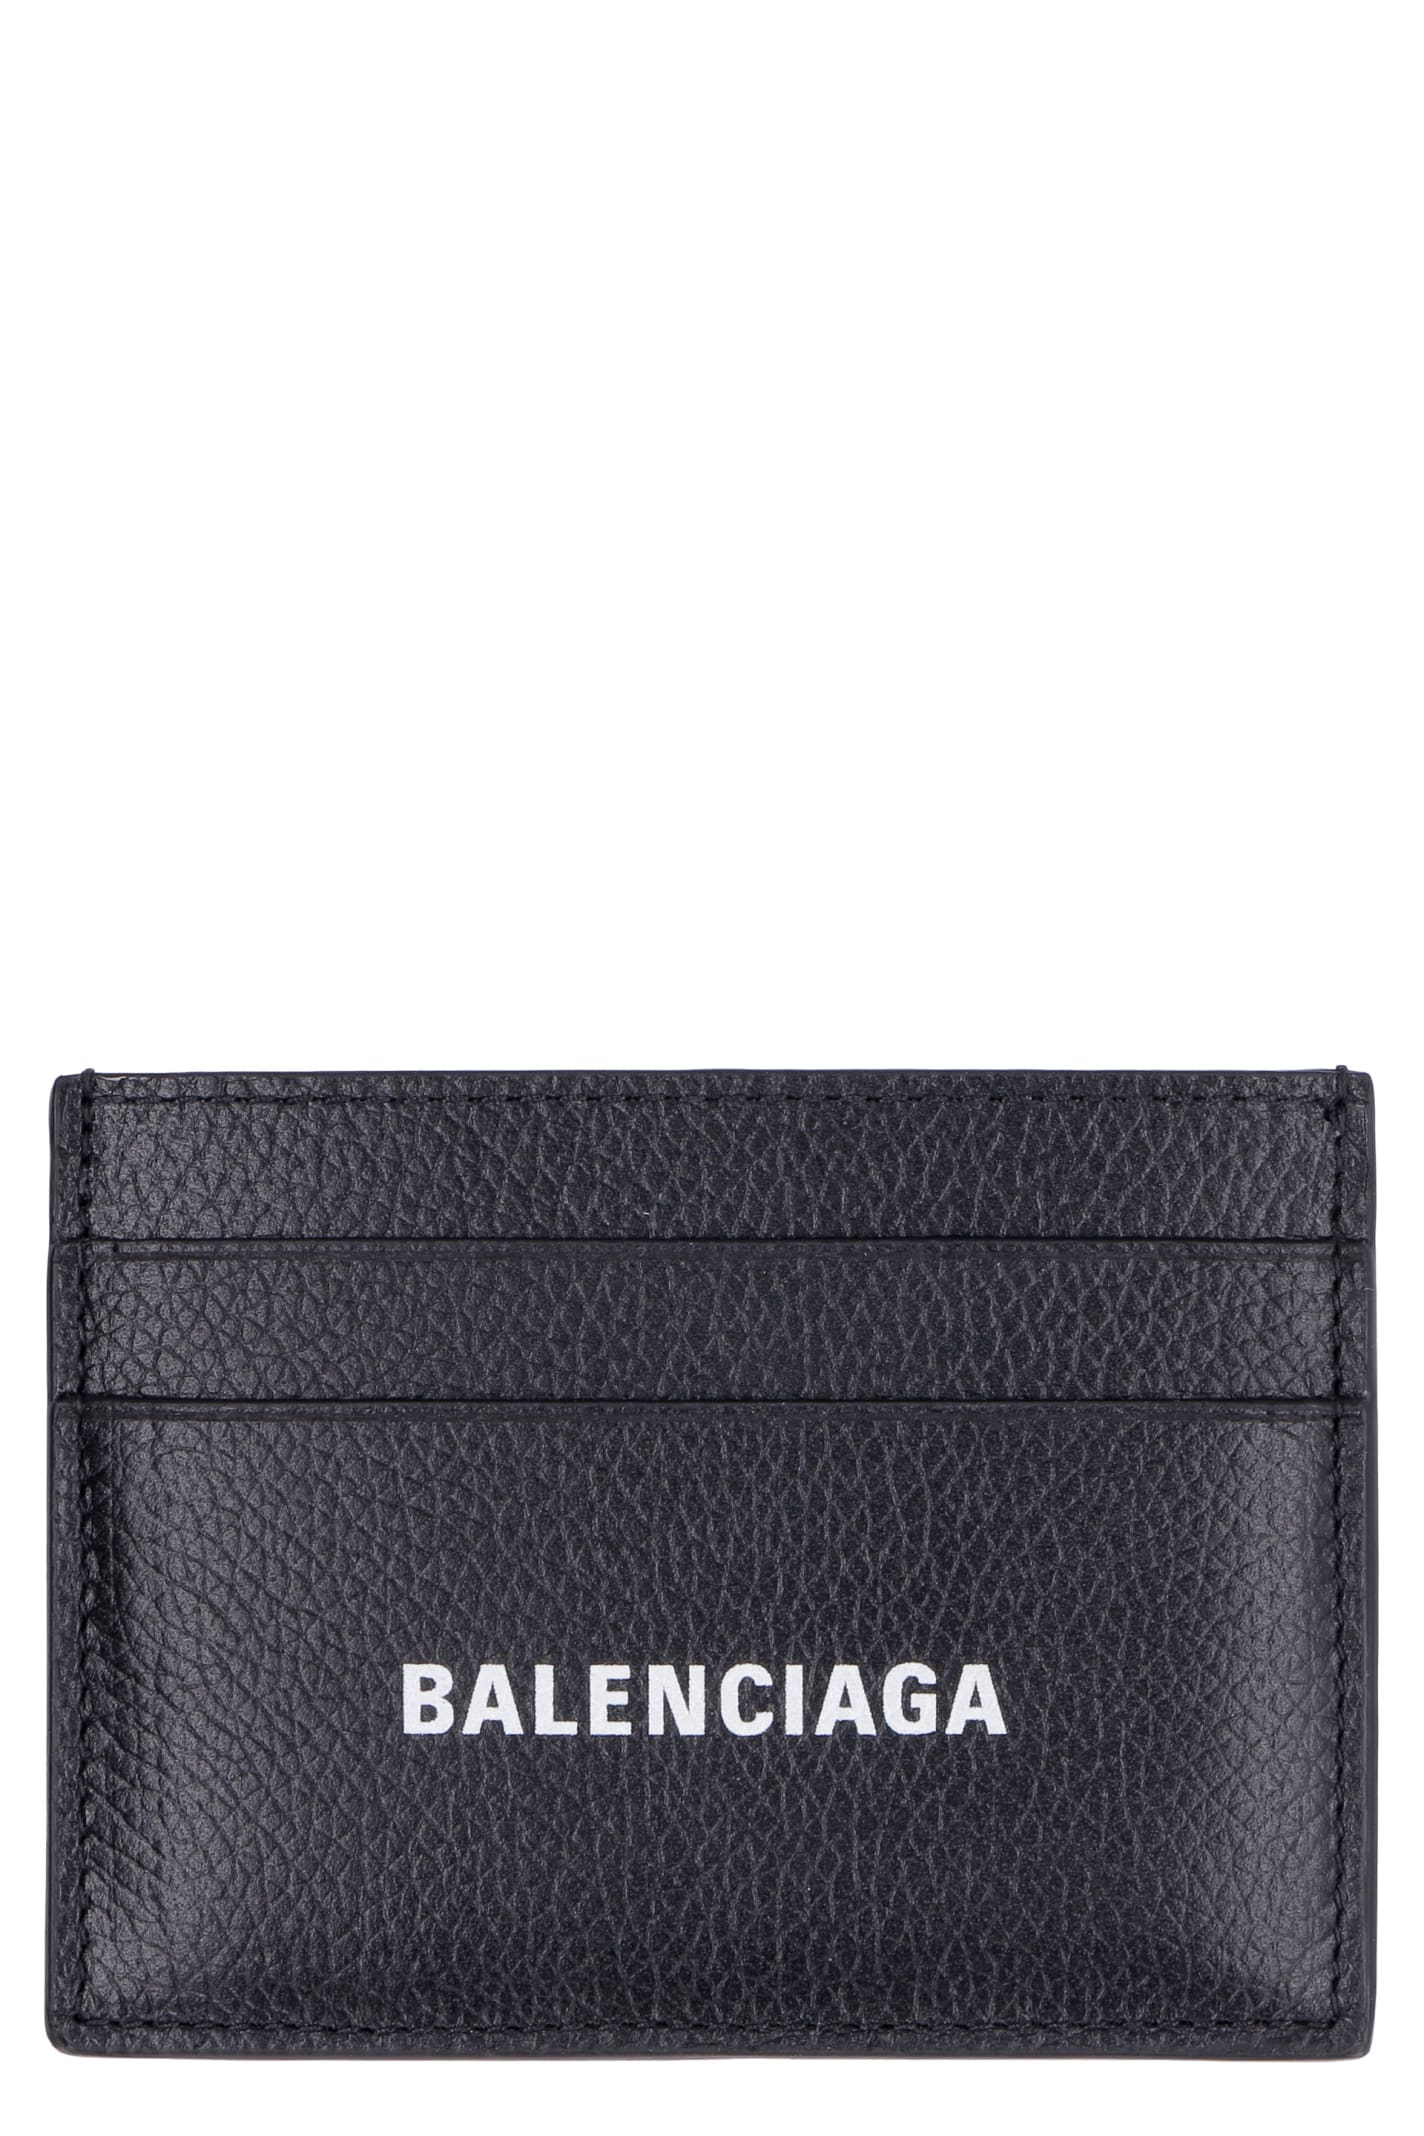 Balenciaga Pebbled Calfskin Card Holder